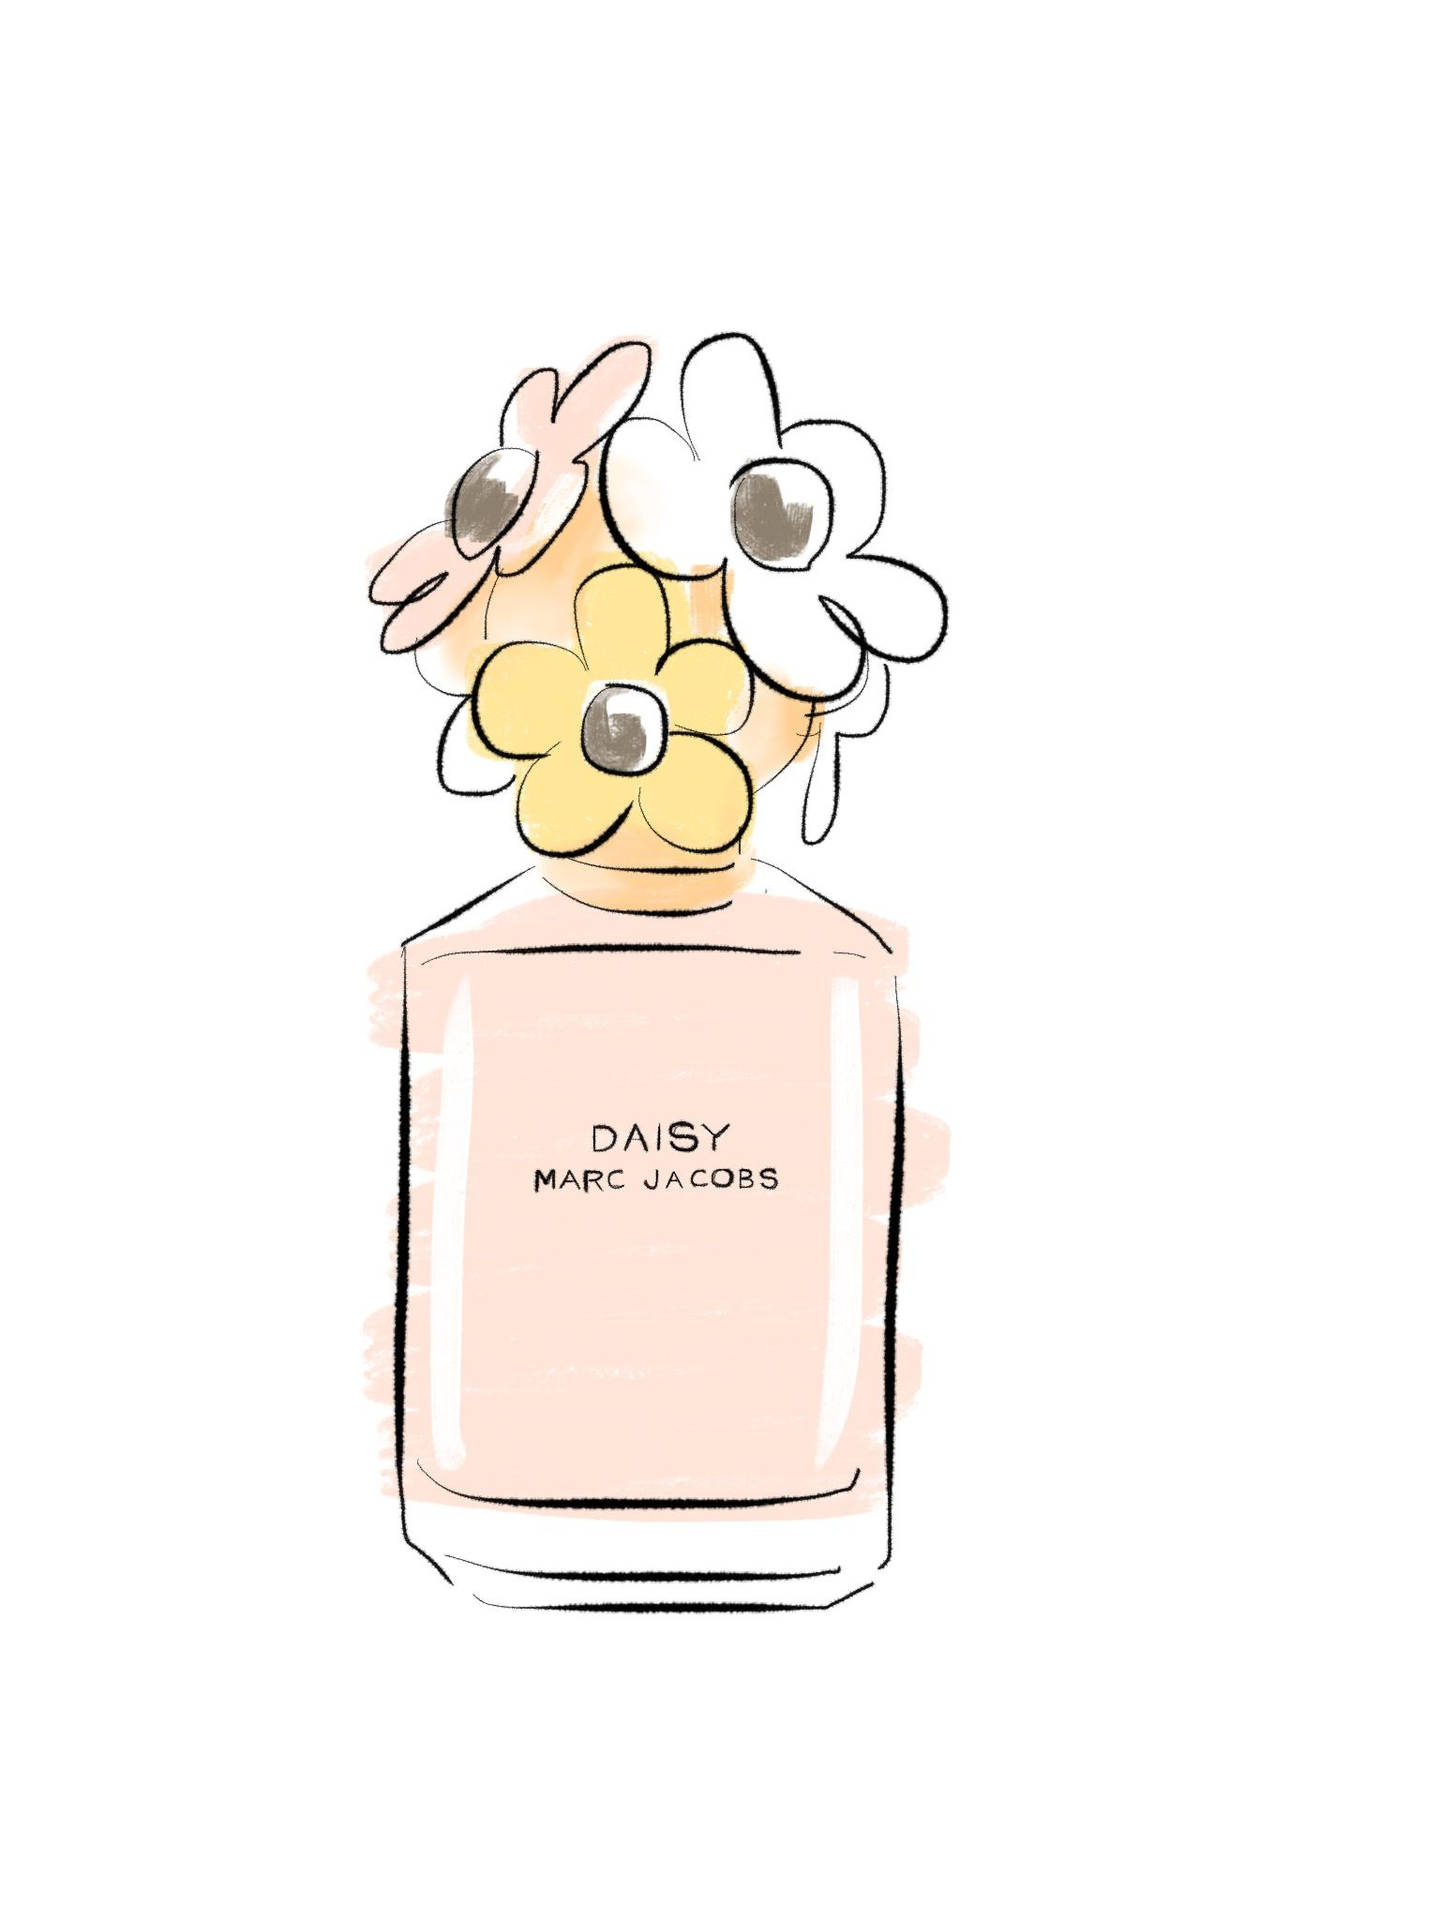 Marc Jacobs Daisy Perfume Art Background